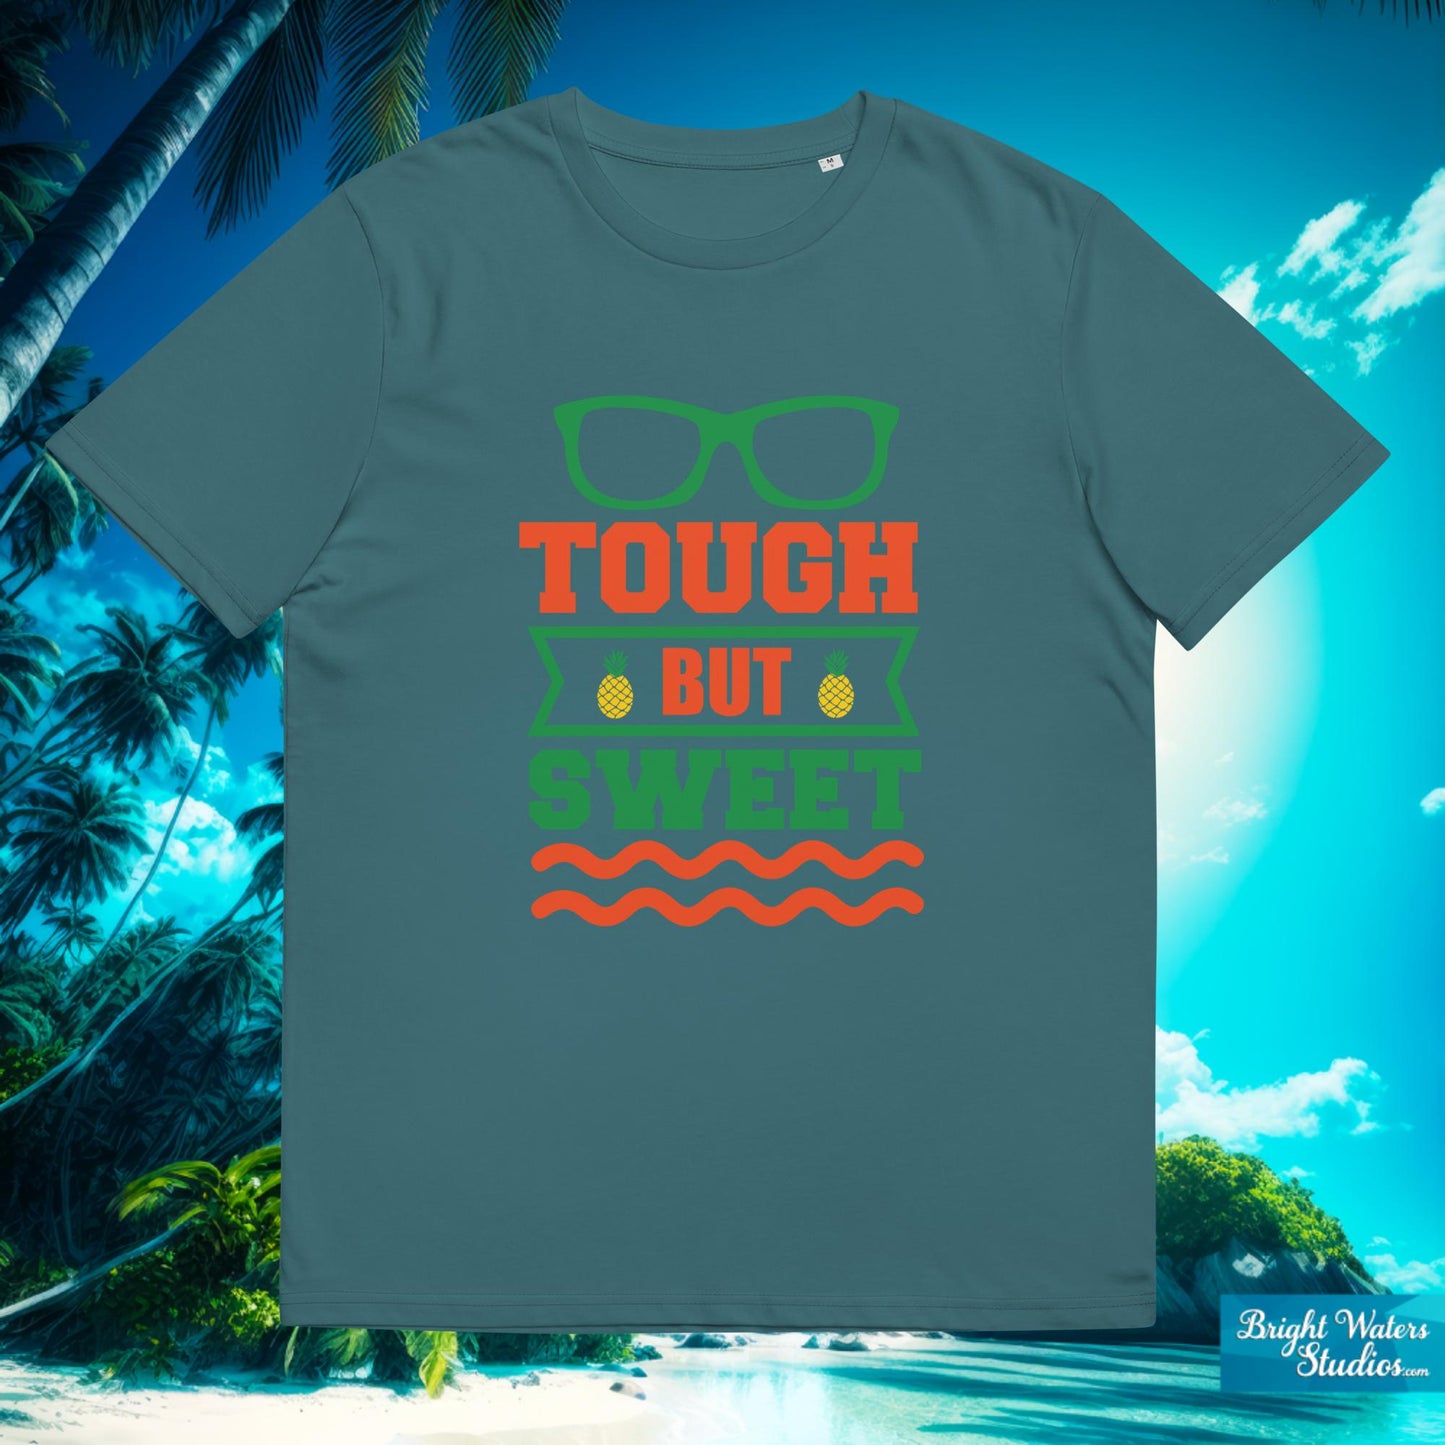 Tough but Sweet T-Shirt